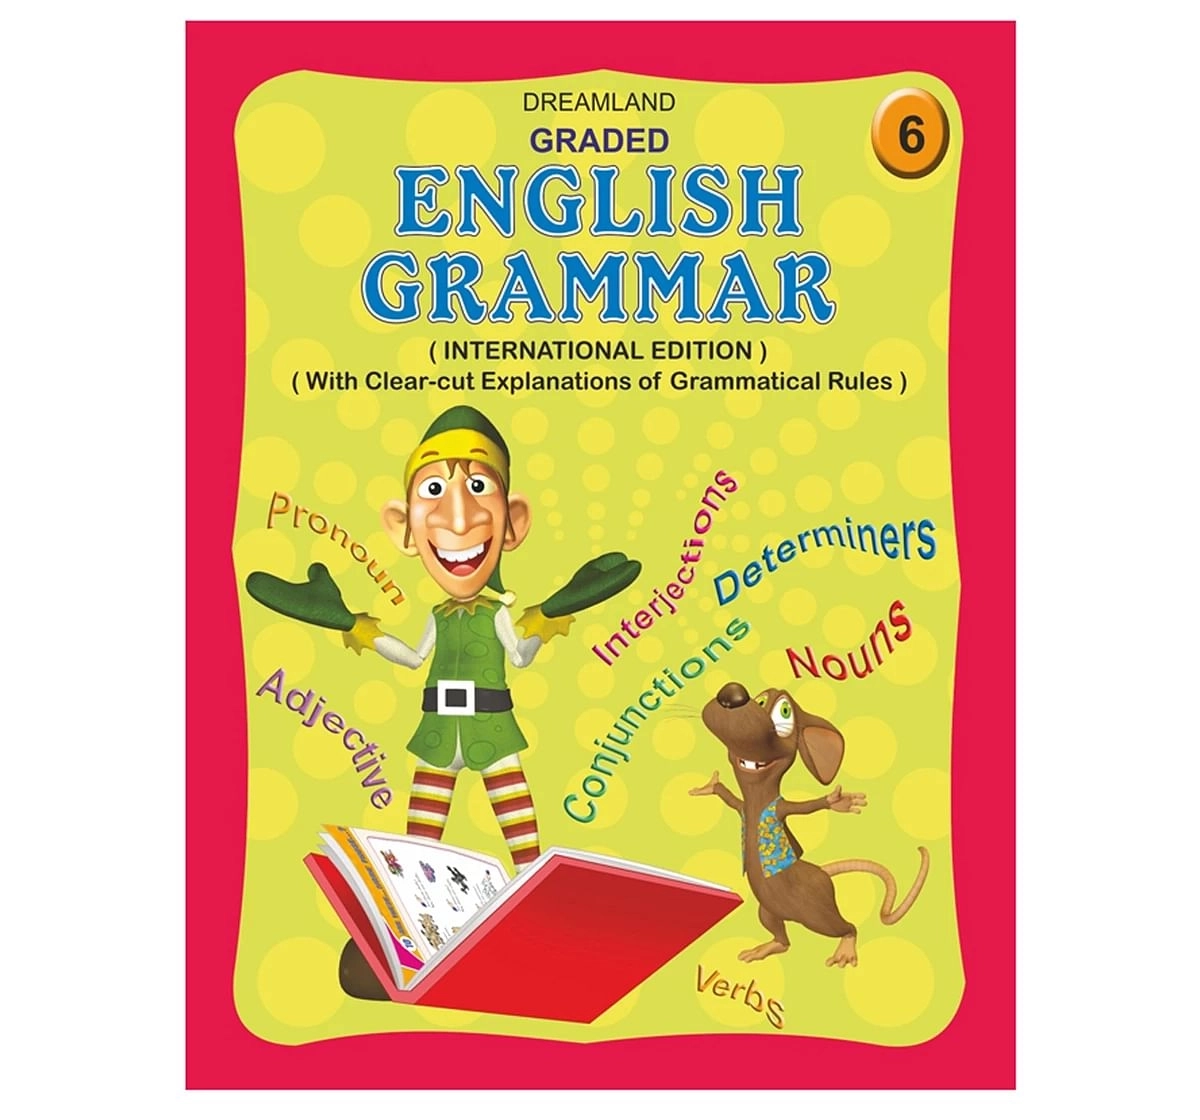 Dreamland Paper Back Graded English Grammar Part 6 School Textbooks for kids 5Y+, Multicolour